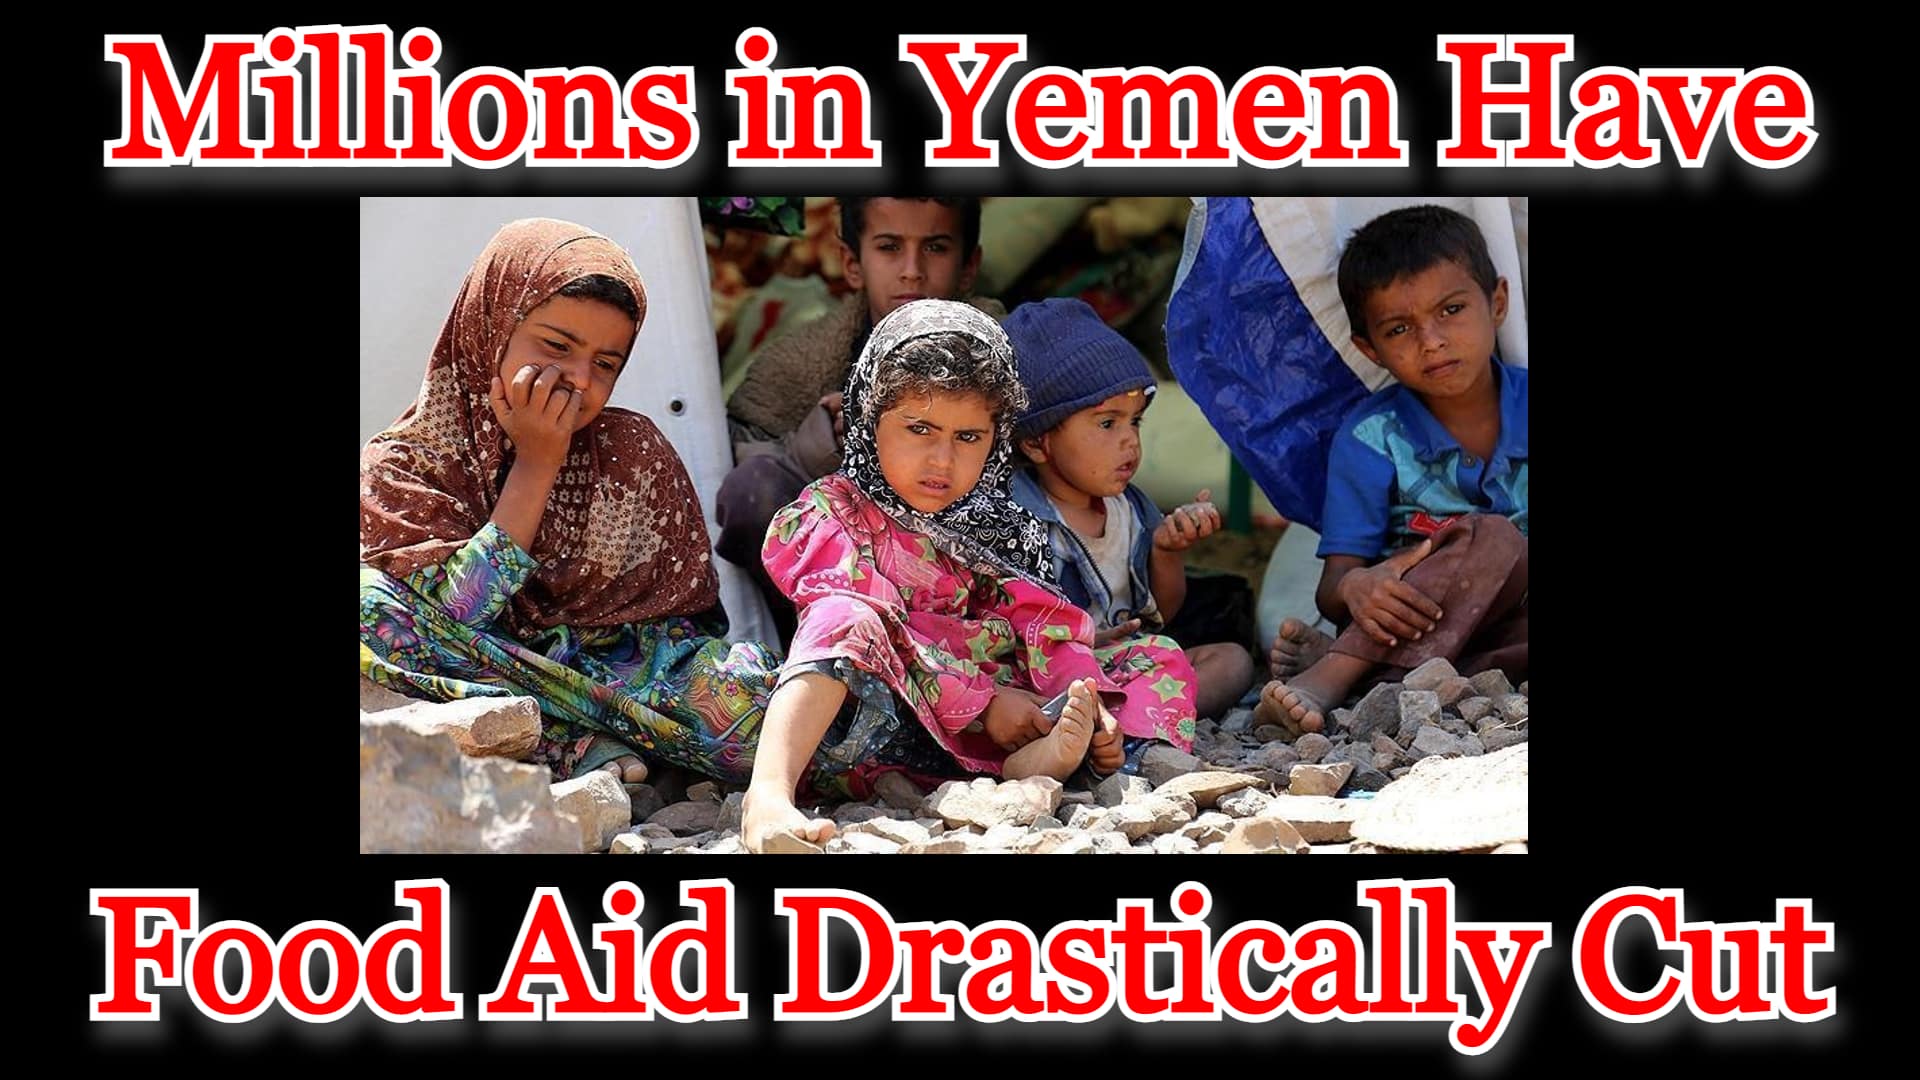 COI #296: Millions in Yemen Have Food Aid Drastically Cut